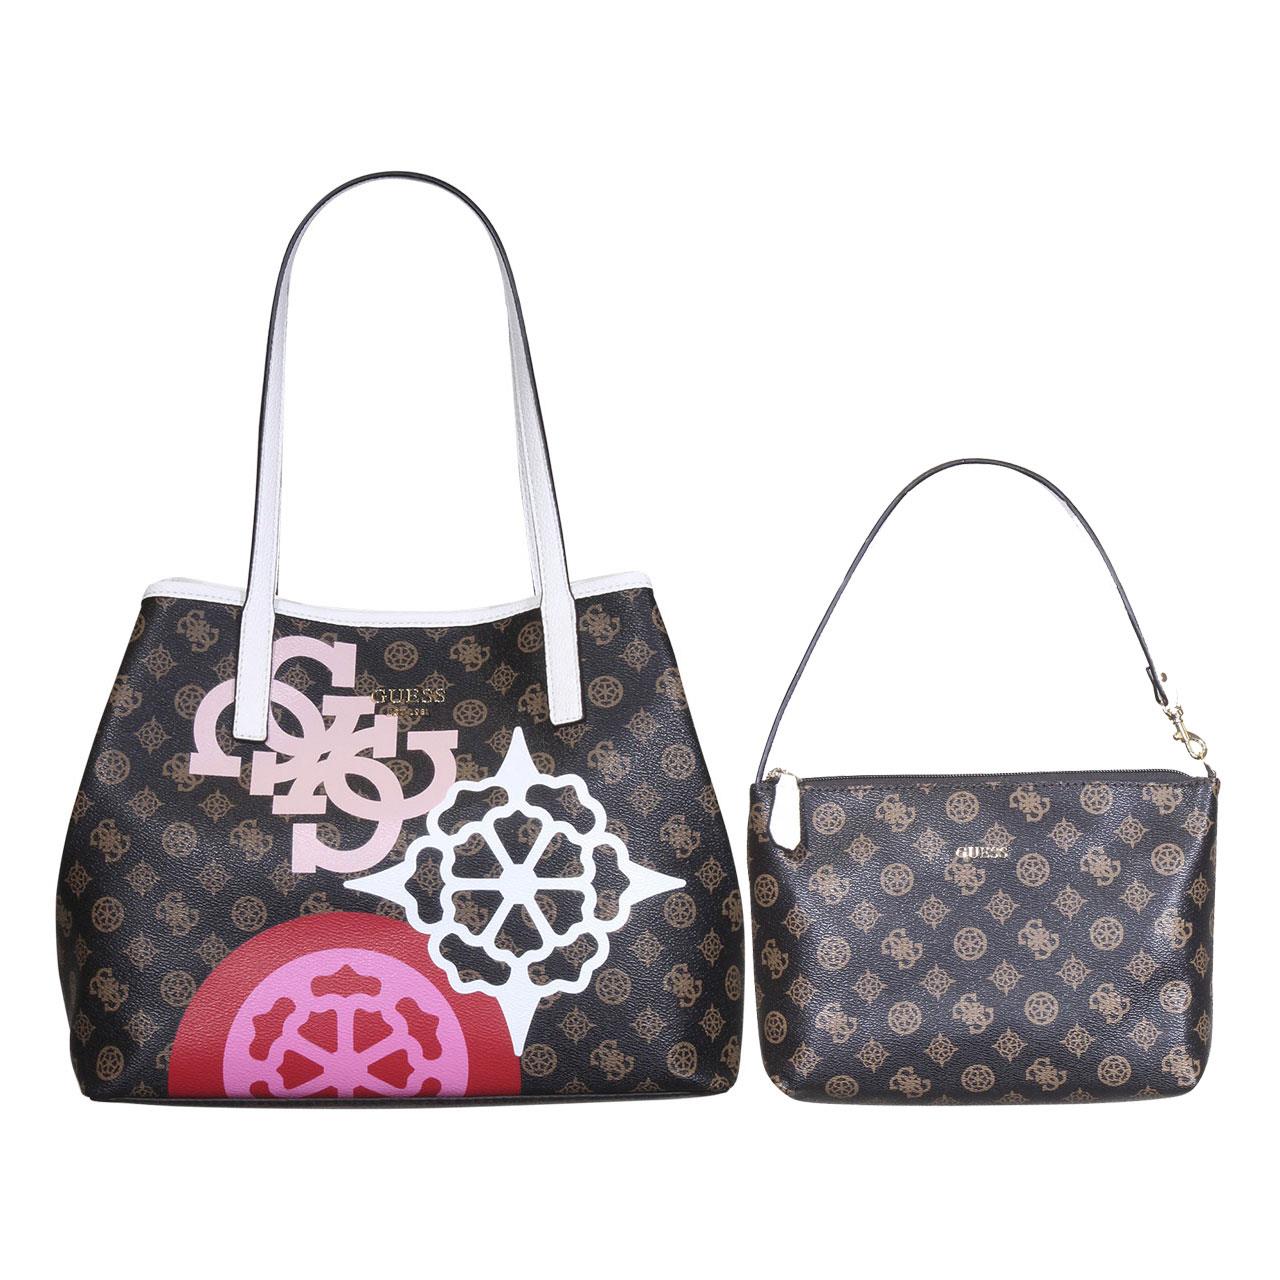 Handbags | Shop Handbags best brands | Fash Brands - Page 15